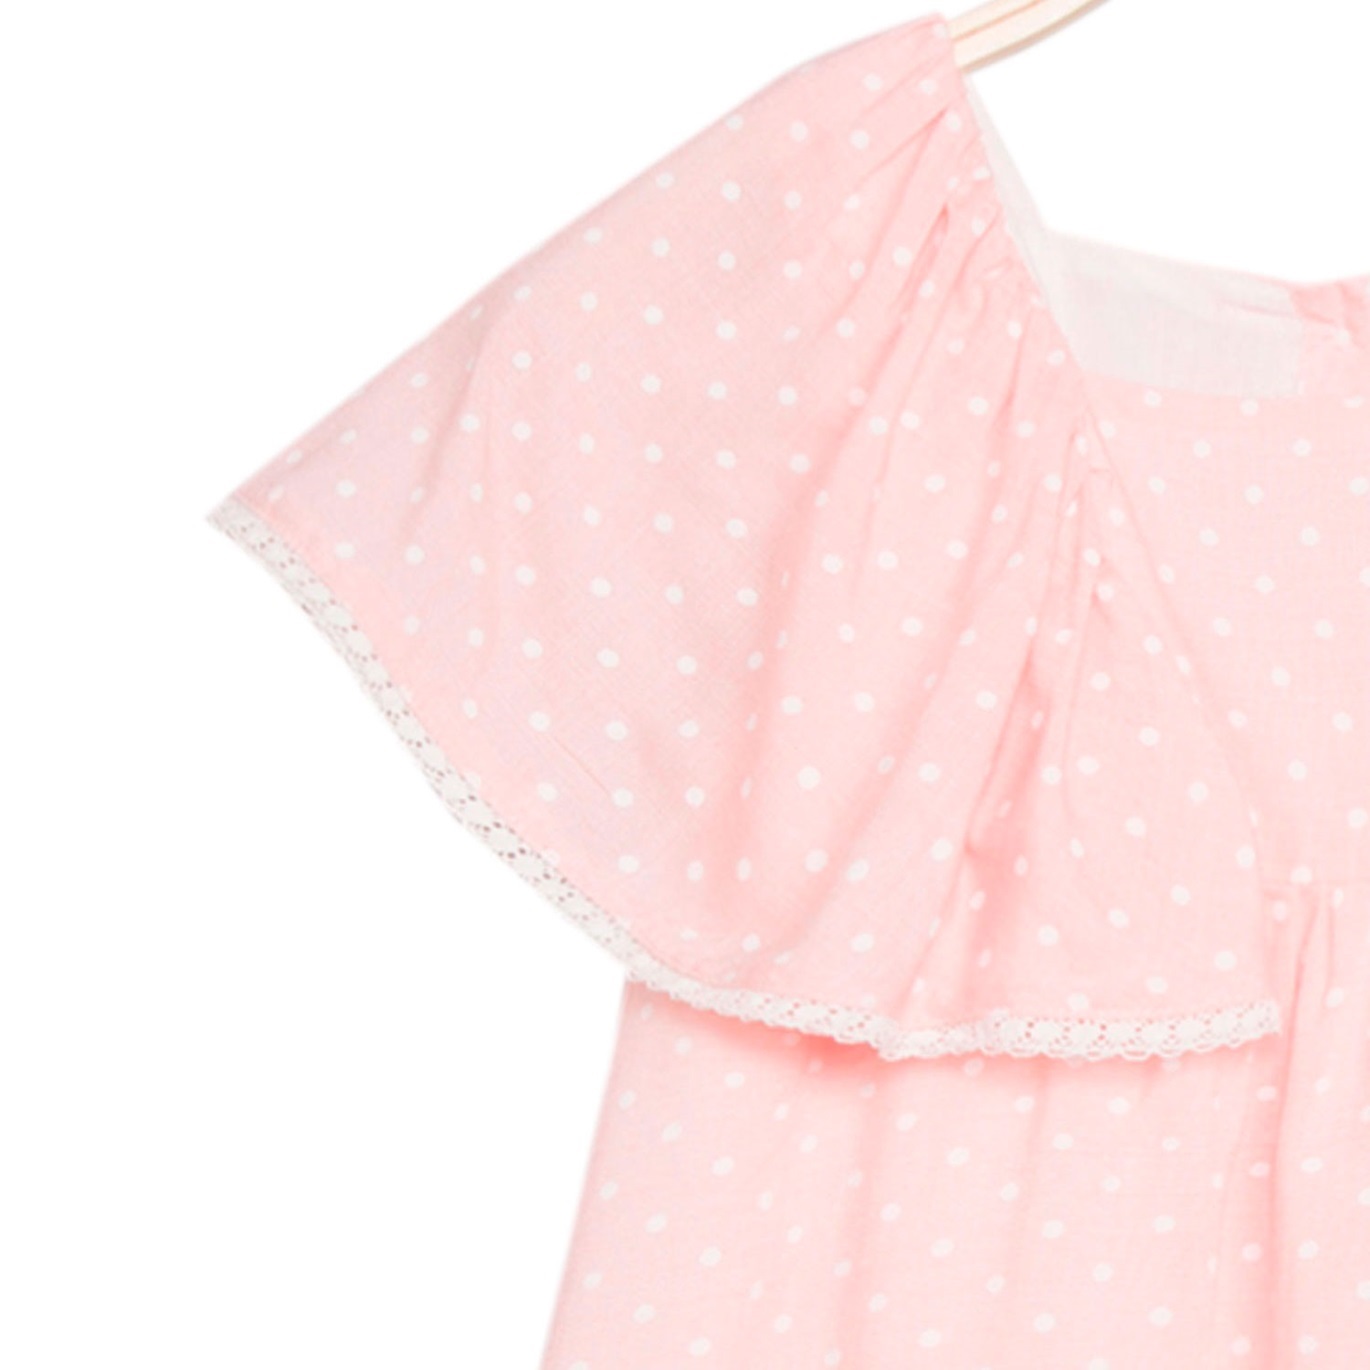 Imagen de Vestido de niña en rosa claro con topos